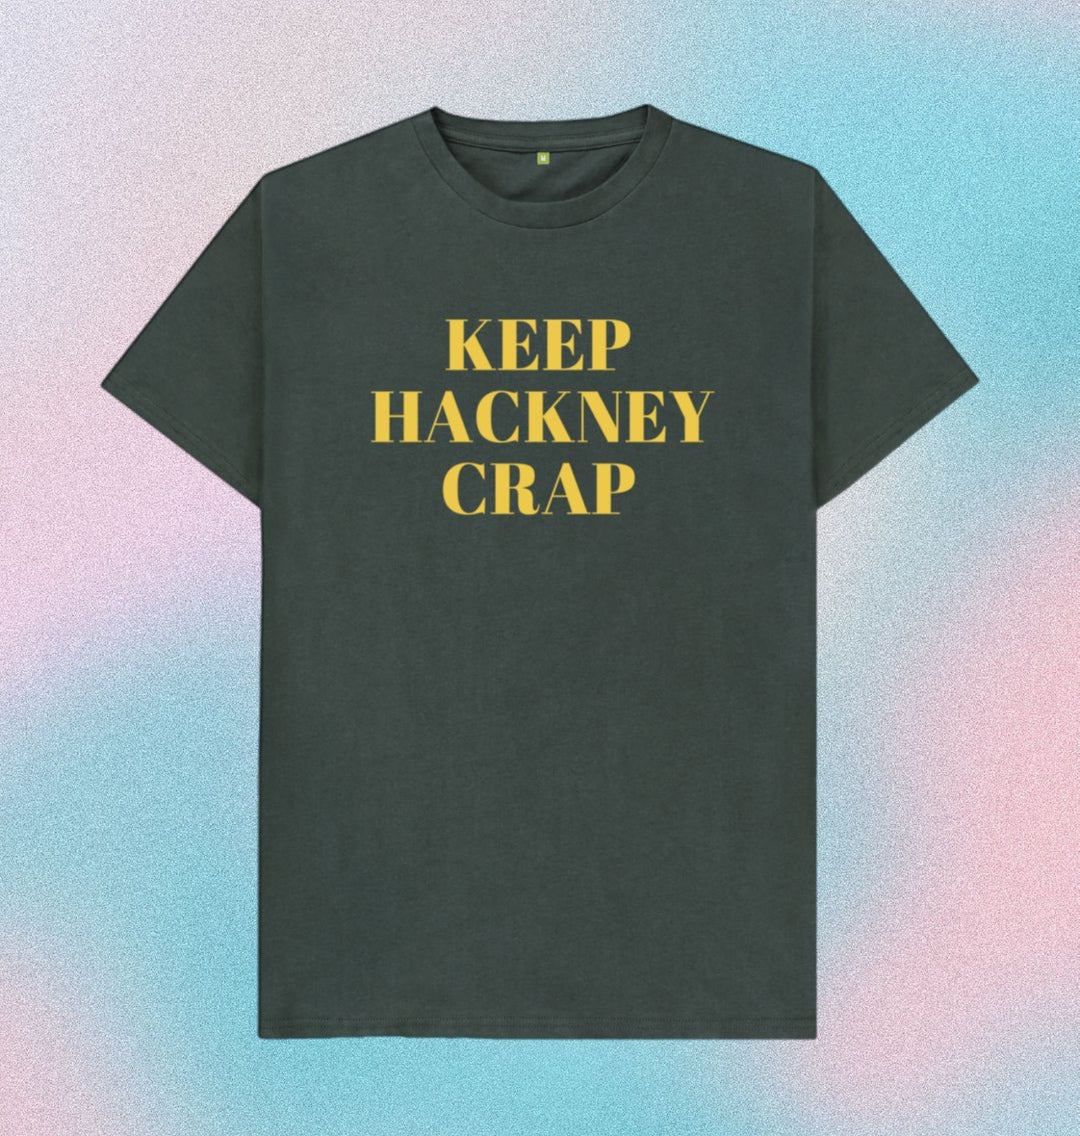 Keep Hackney Crap Unisex yellow text T-shirt